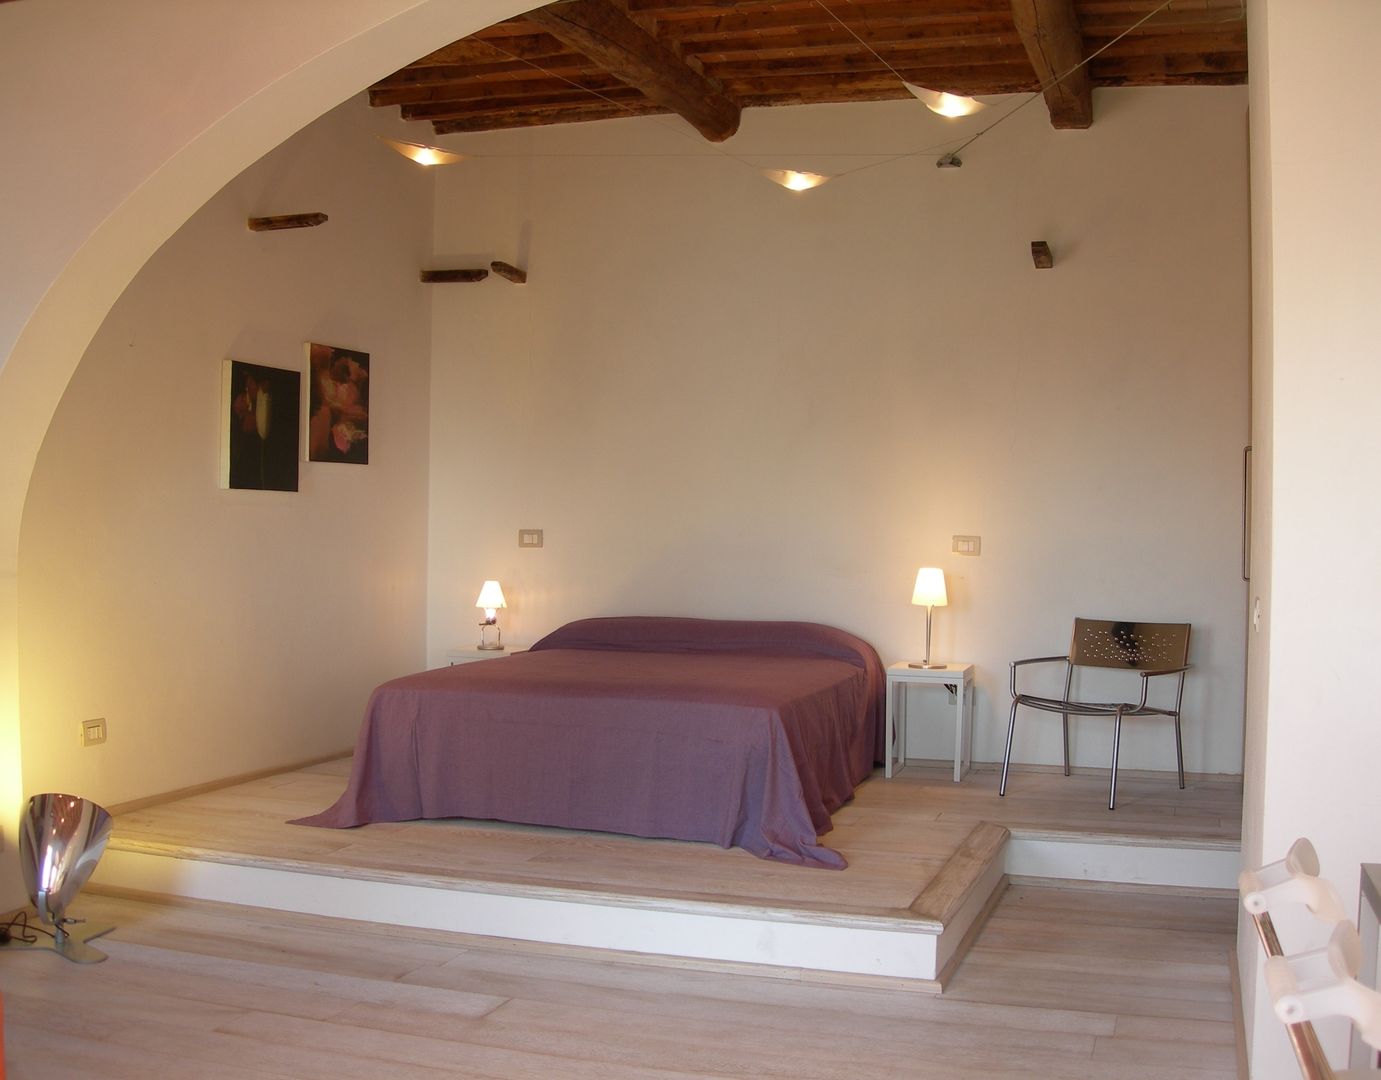 Casa per vacanze a Chiessi (Isola d'Elba) - Italy, 70m2 Studio di architettura 70m2 Studio di architettura Quartos mediterrânicos